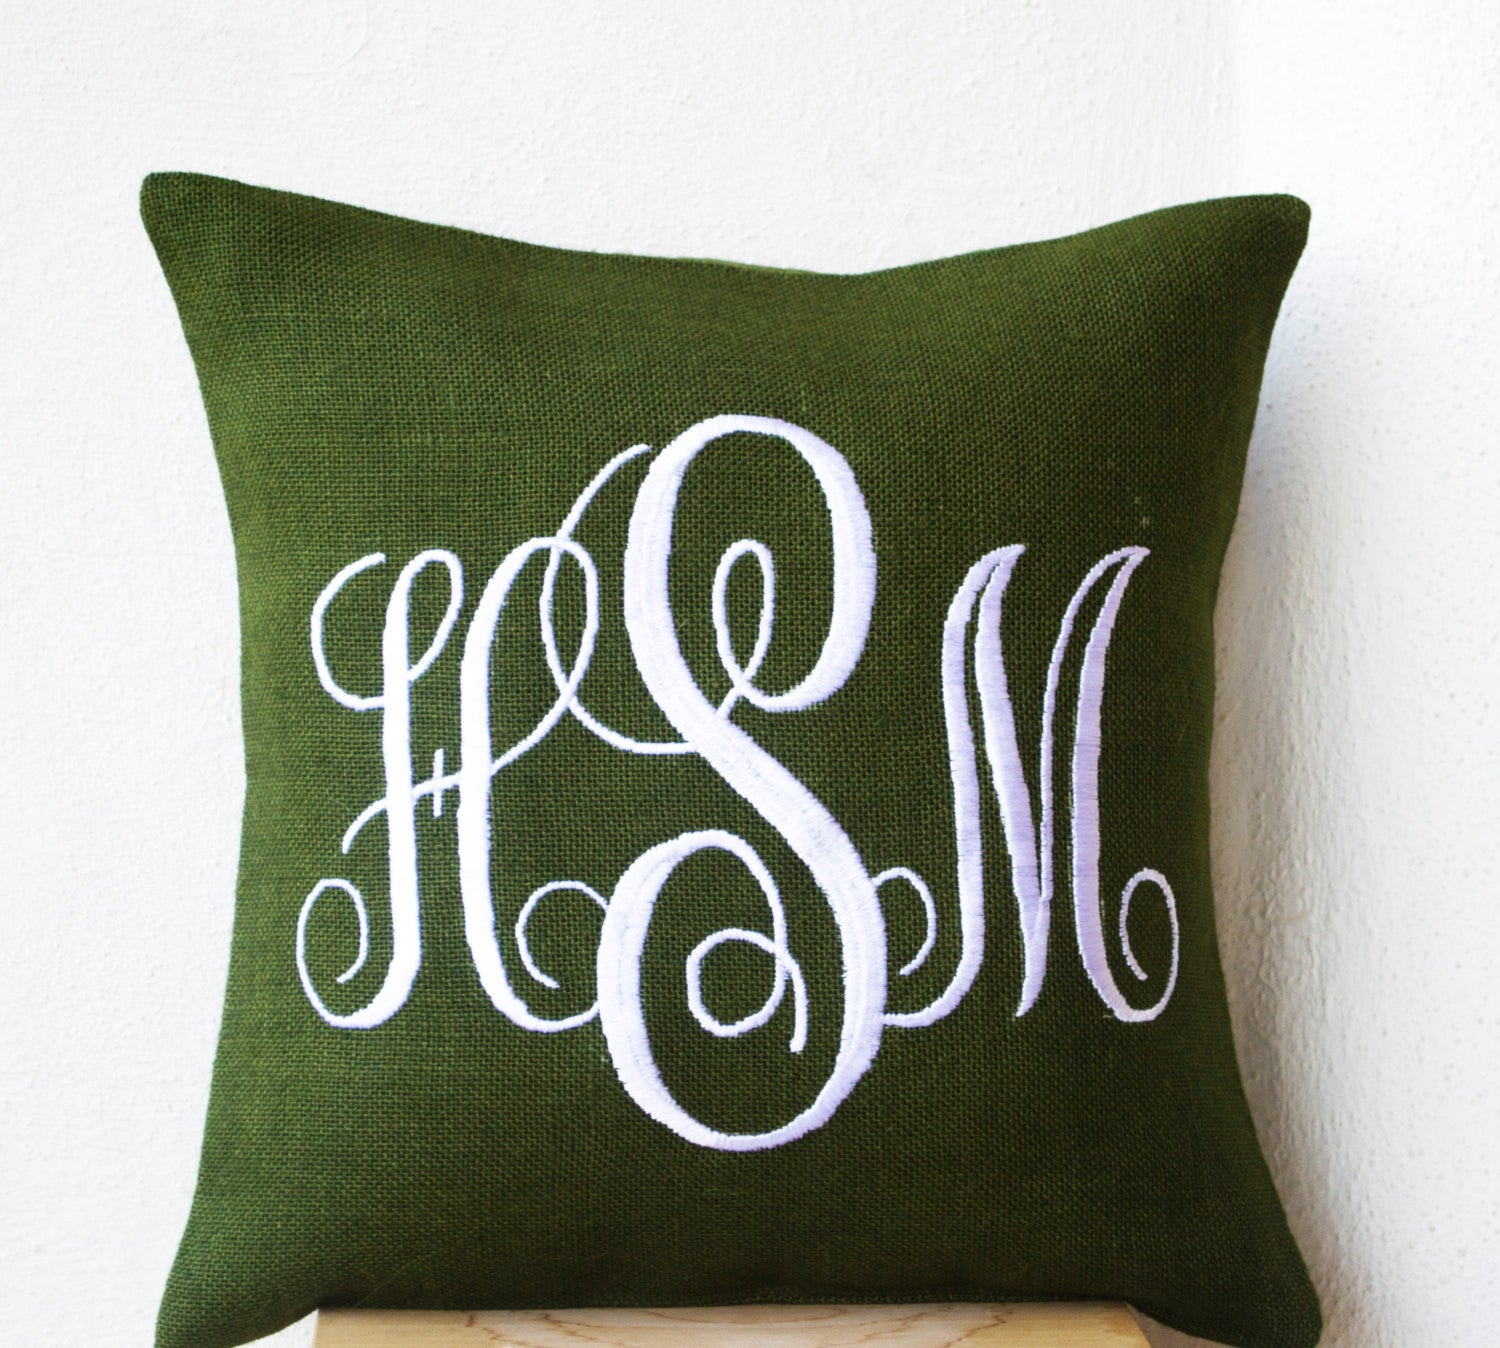 Handmade green burlap pillows with monogram